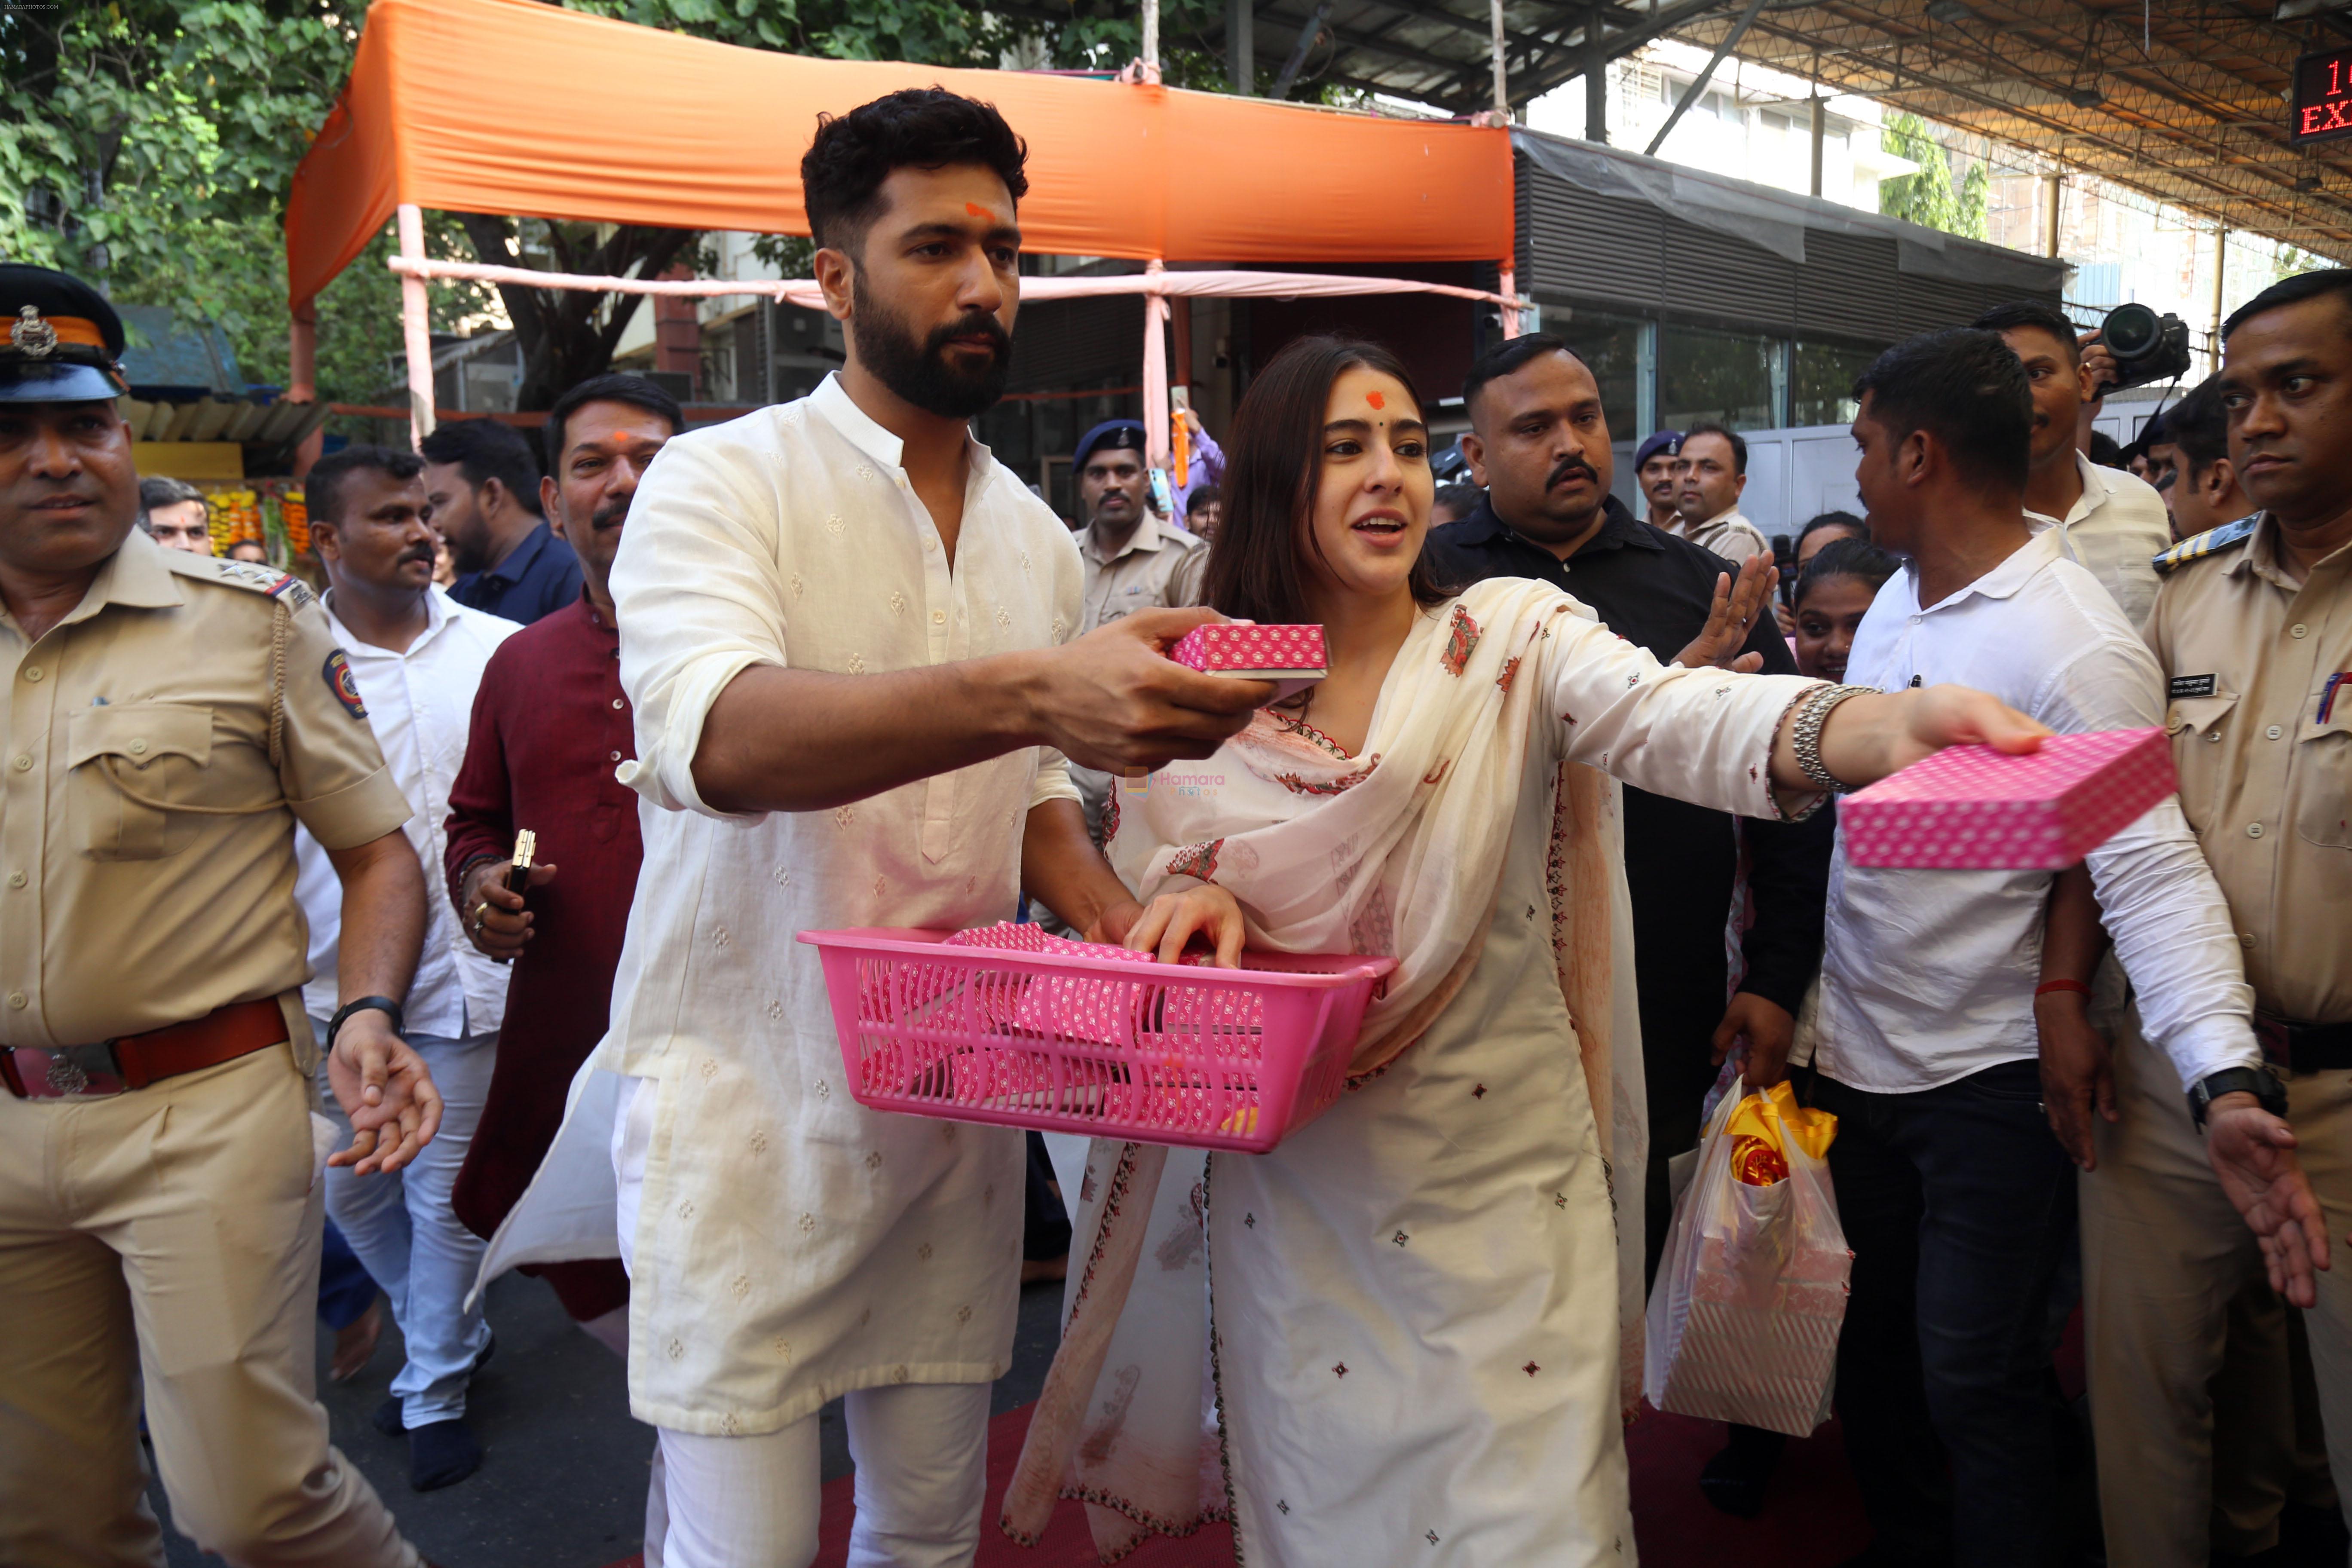 Vicky Kaushal And Sara Ali Khan distribute sweet packets at Shree Siddhivinayak Ganapati Mandir and seek blessings for their movie Zara Hatke Zara Bachke